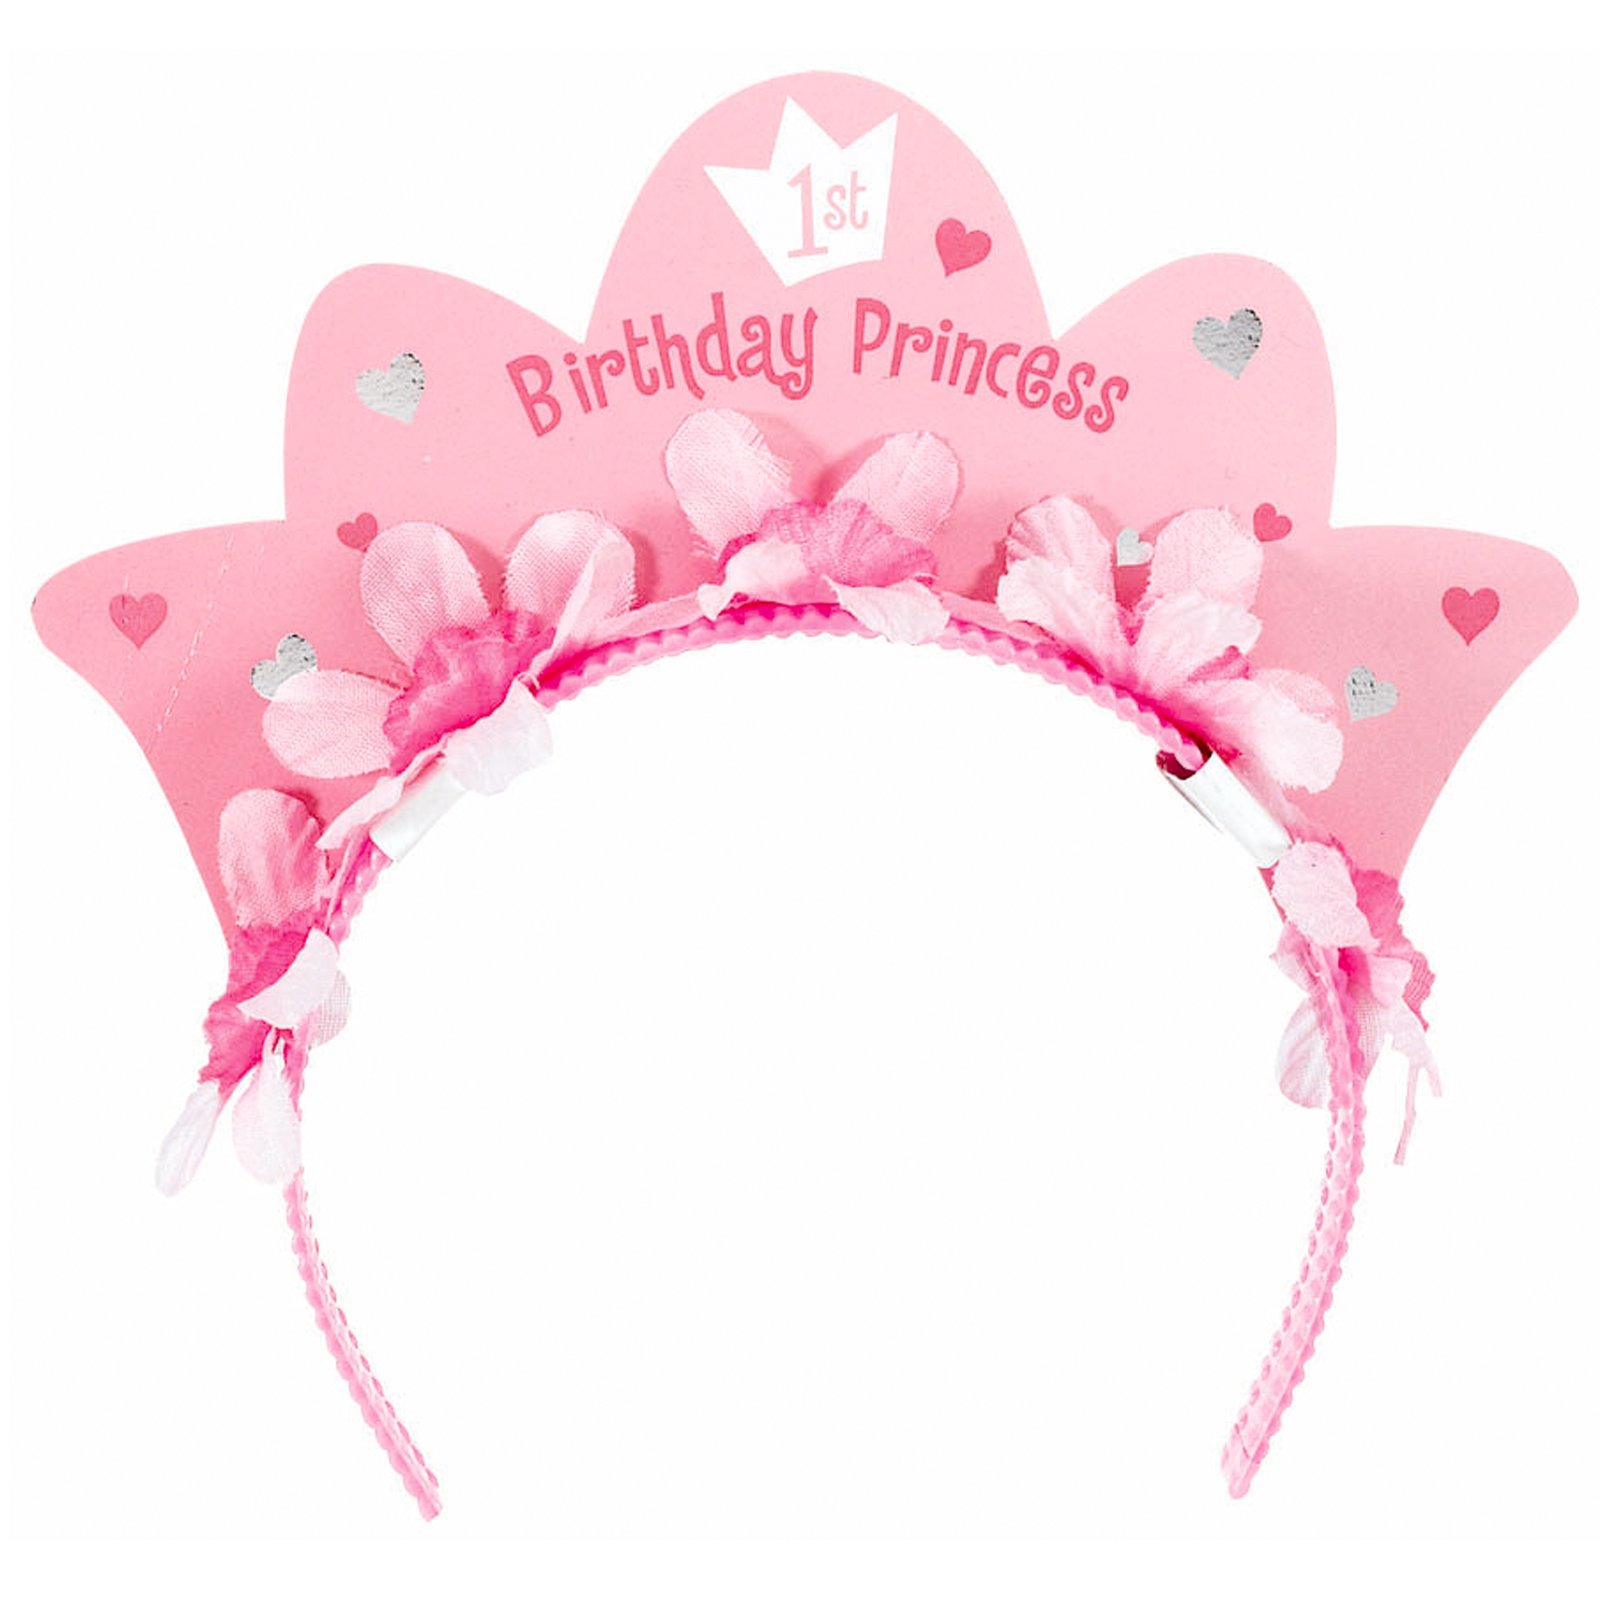 1st Birthday Princess Tiara Headband   Veil Entertainment   Promotions